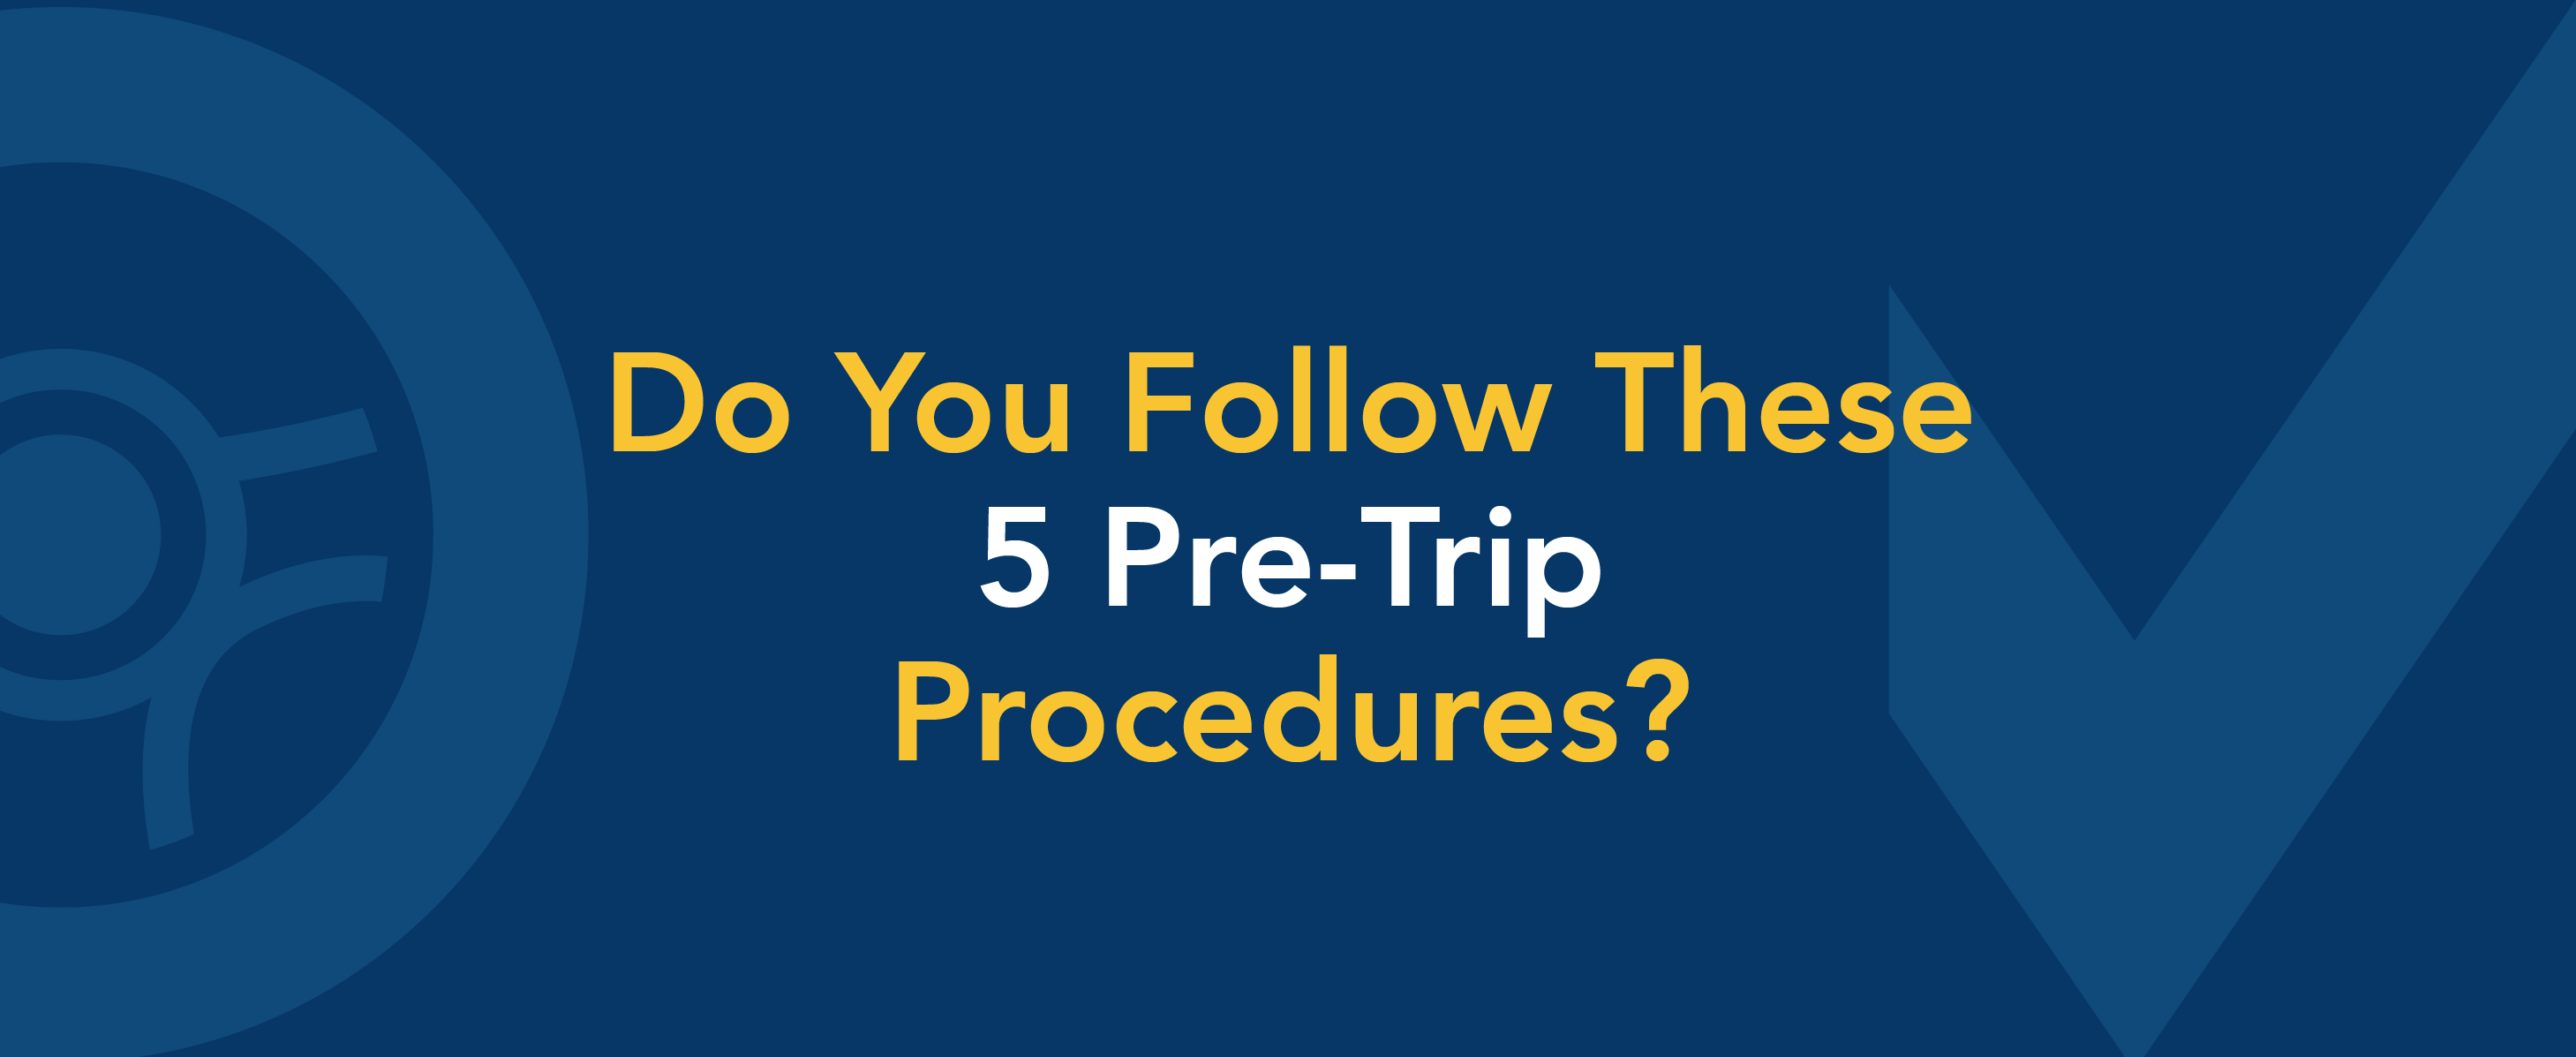 Do you follow these 5 pre-trip procedures?